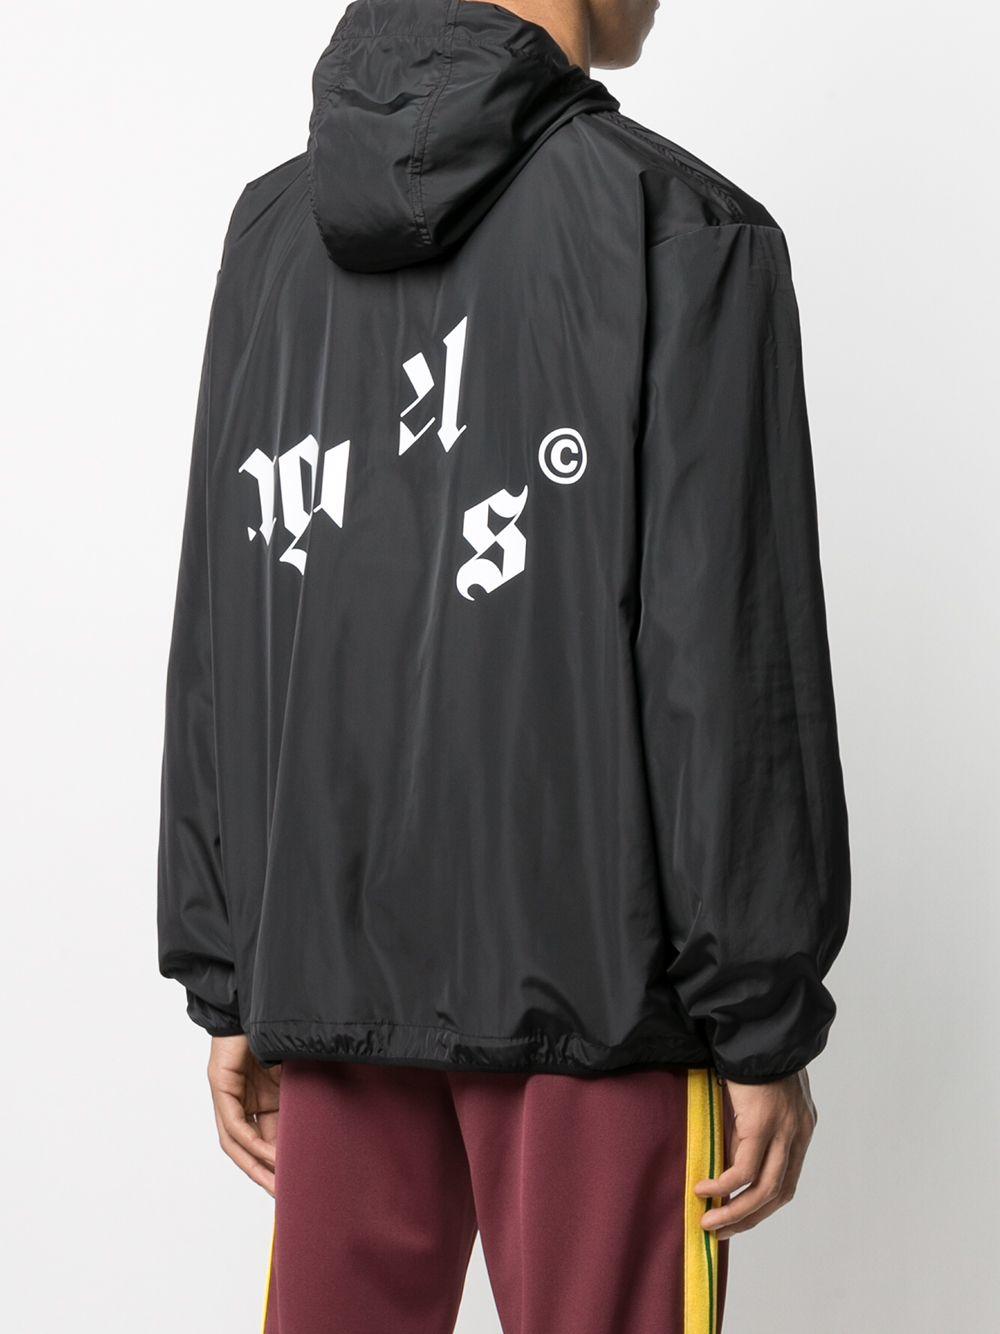 Palm Angels Logo Print Zip-up Jacket in Black for Men - Lyst